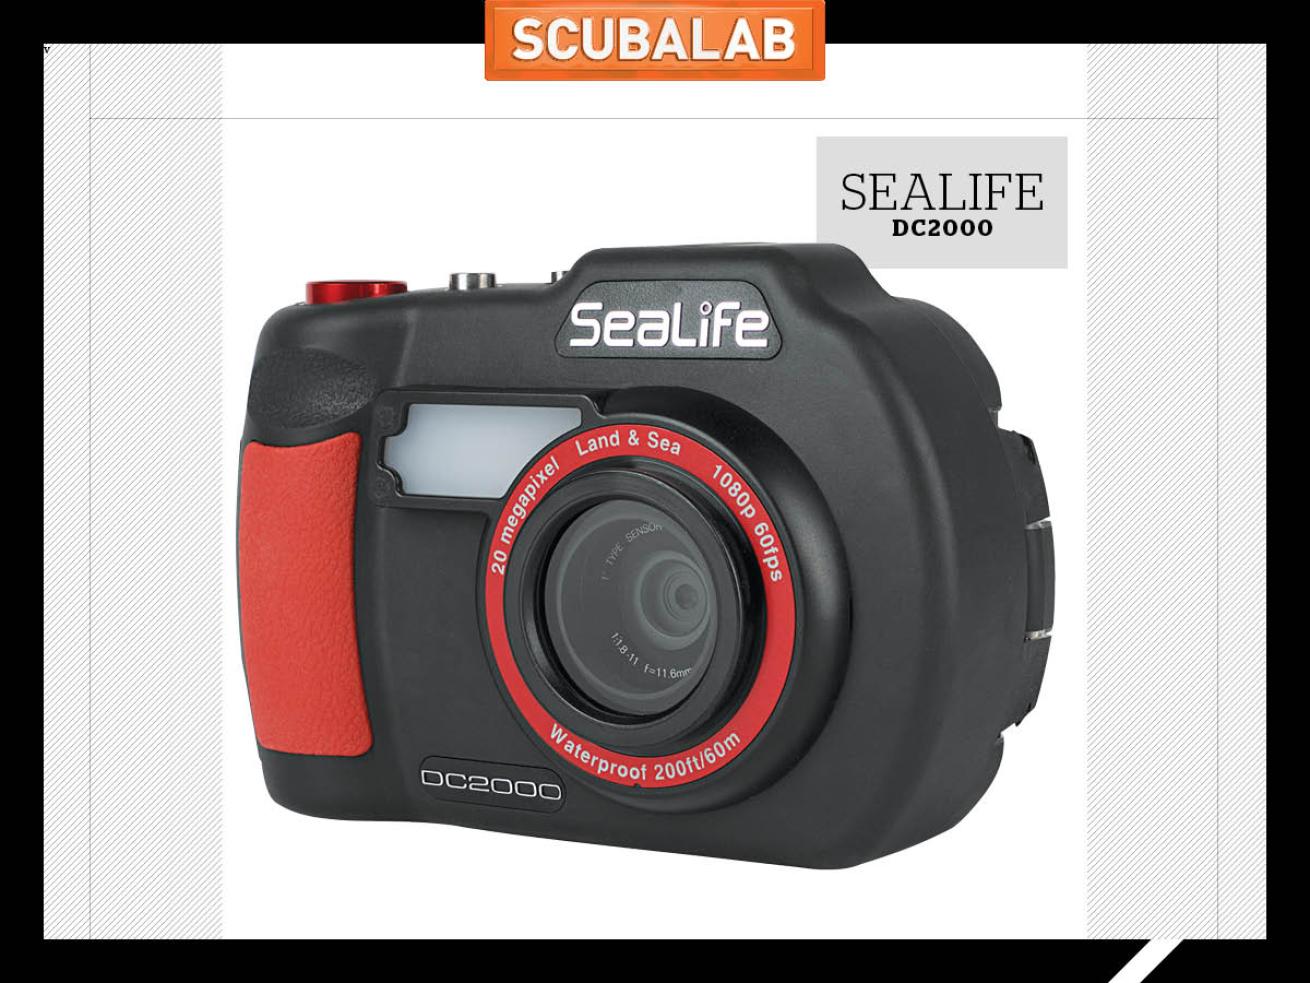 Sealife DC2000 underwater camera ScubaLab photography gear